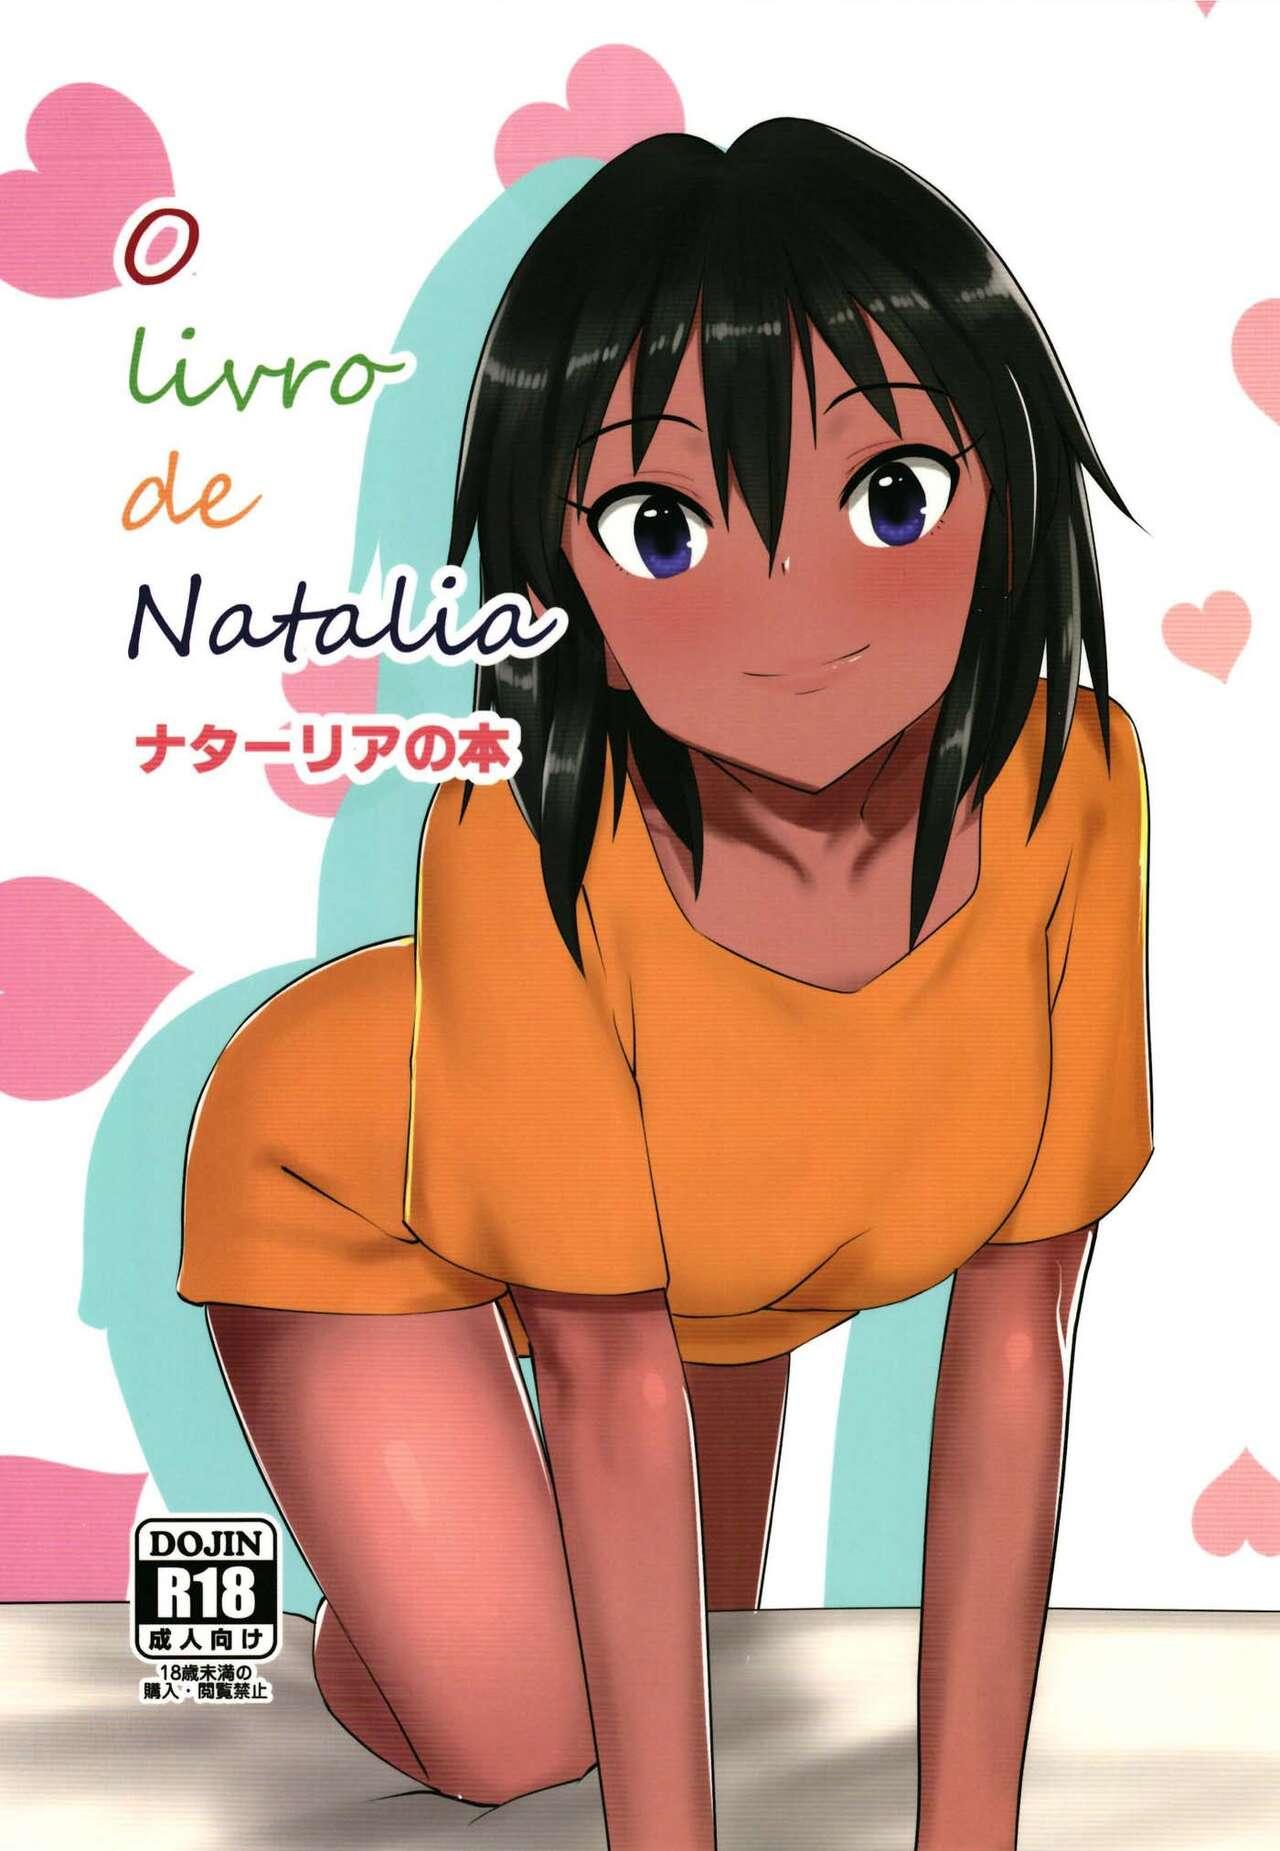 Coed O livro de Natalia - Natalia no Hon - The idolmaster Infiel - Picture 1